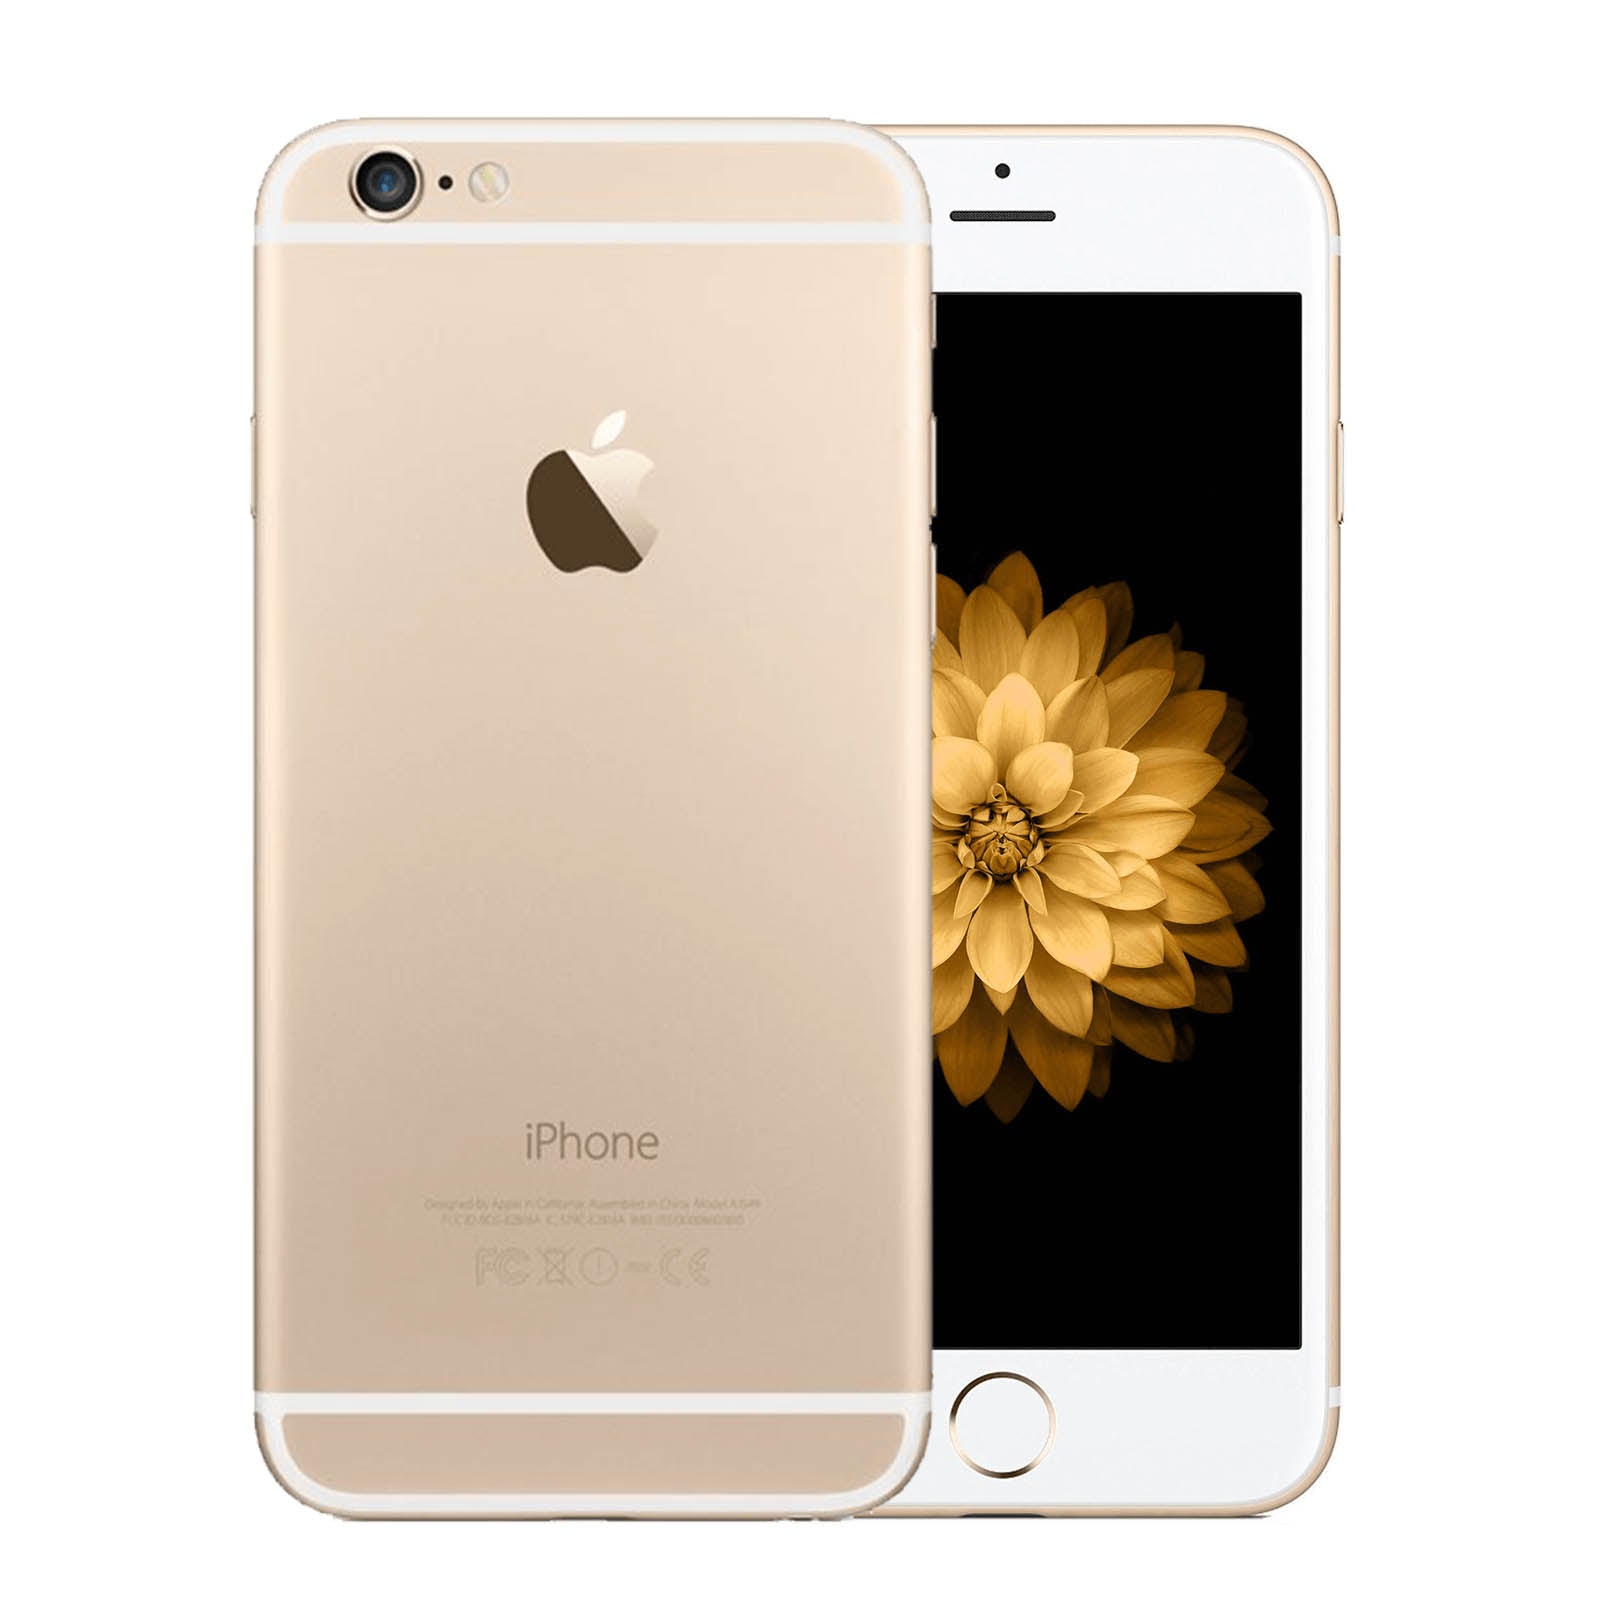 Apple iPhone 6 16GB Gold Good - Unlocked